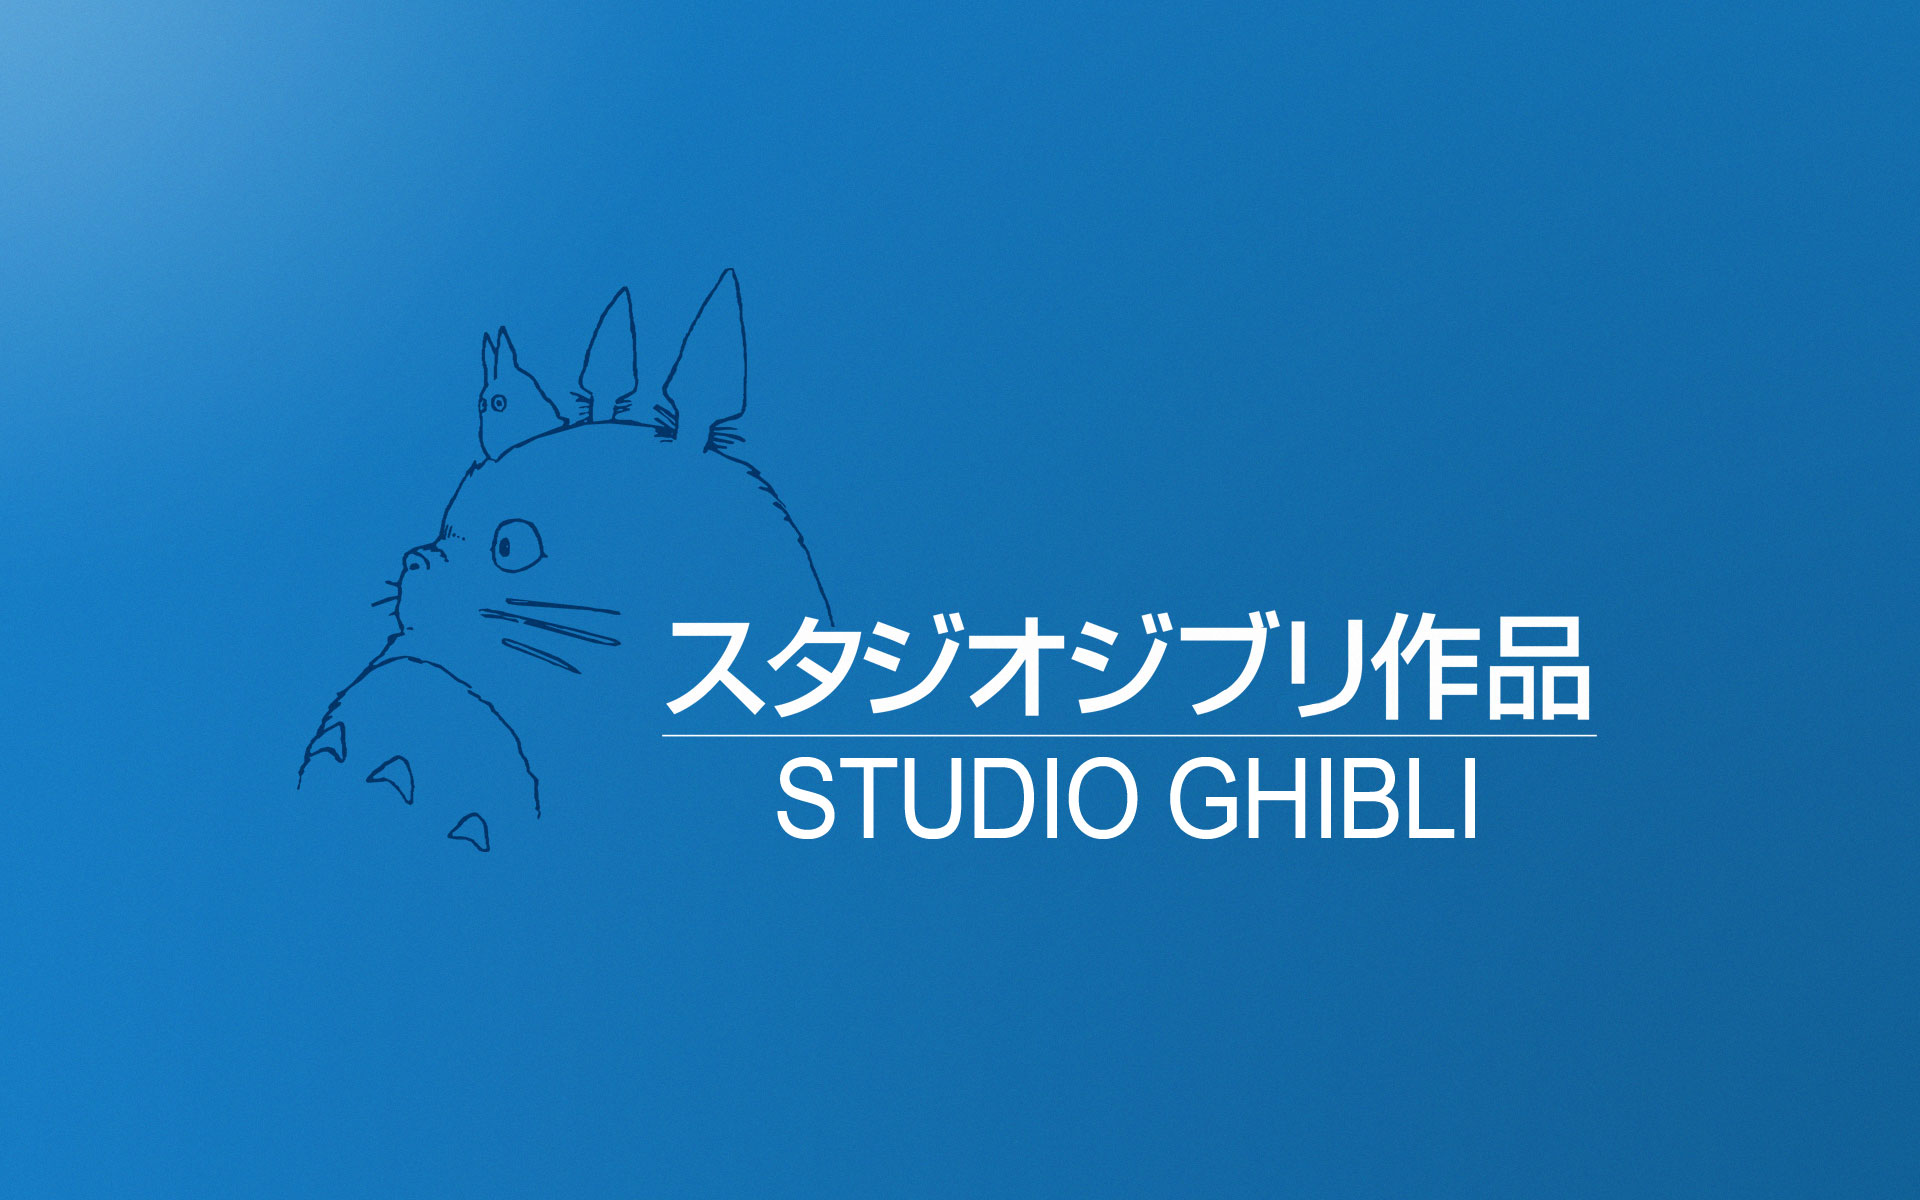 Studio Ghibli - Rilasciate 400 immagini gratuite in alta risoluzione